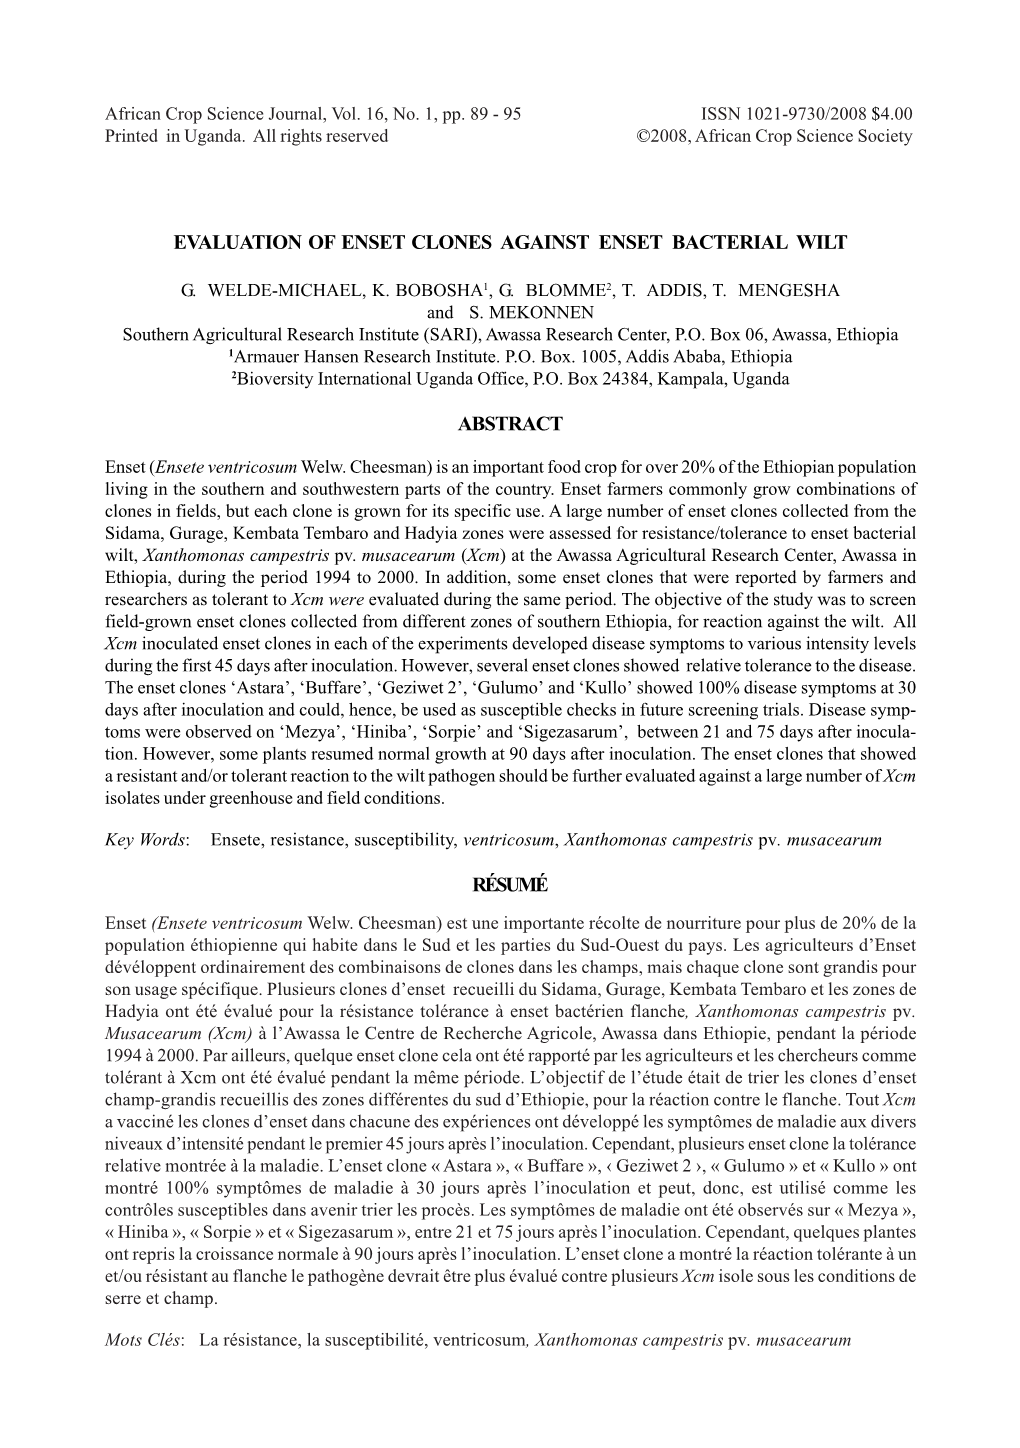 Evaluation of Enset Clones Against Enset Bacterial Wilt